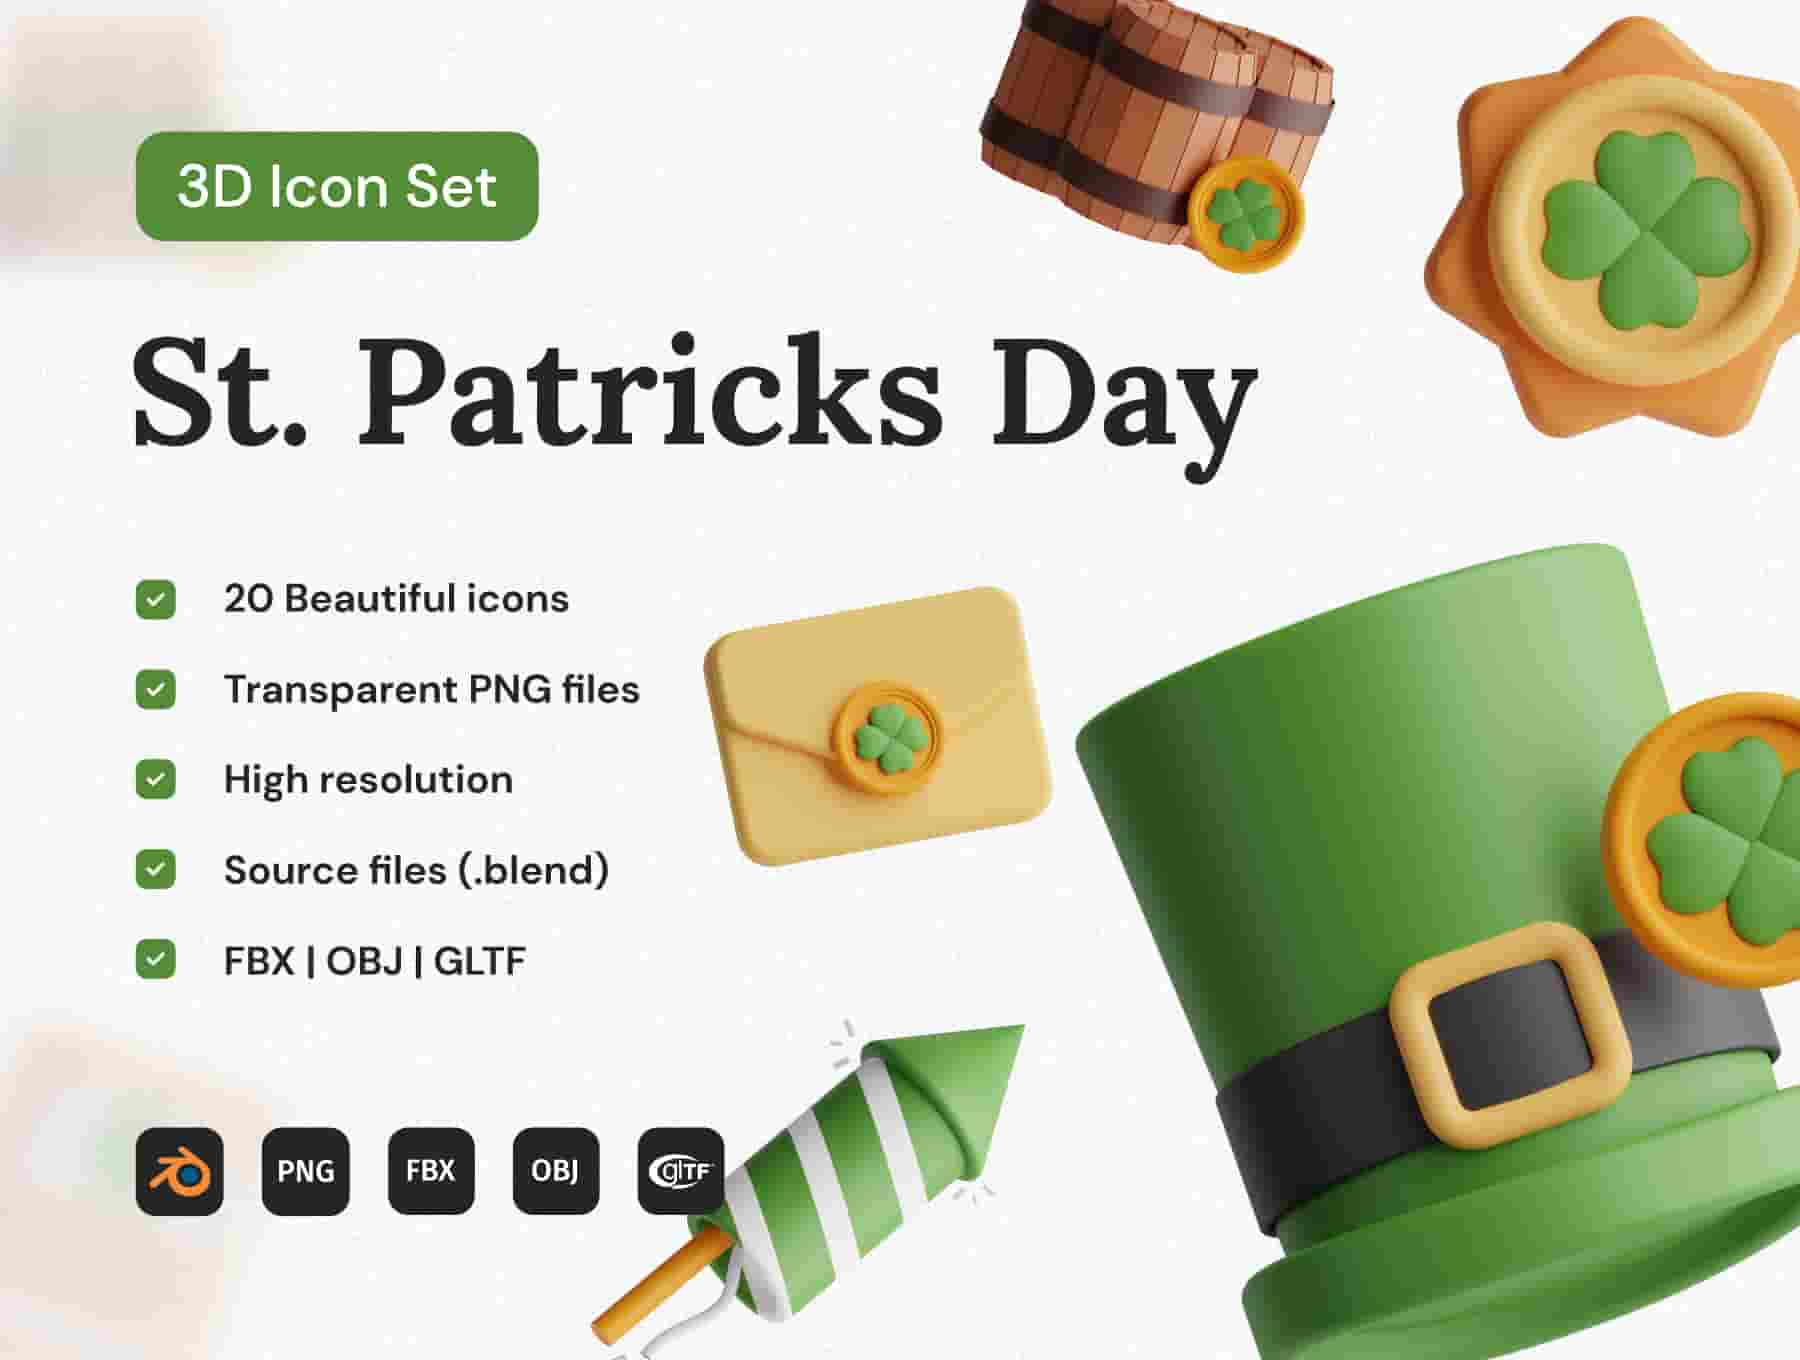 St. Patricks Day 3D Icon Set